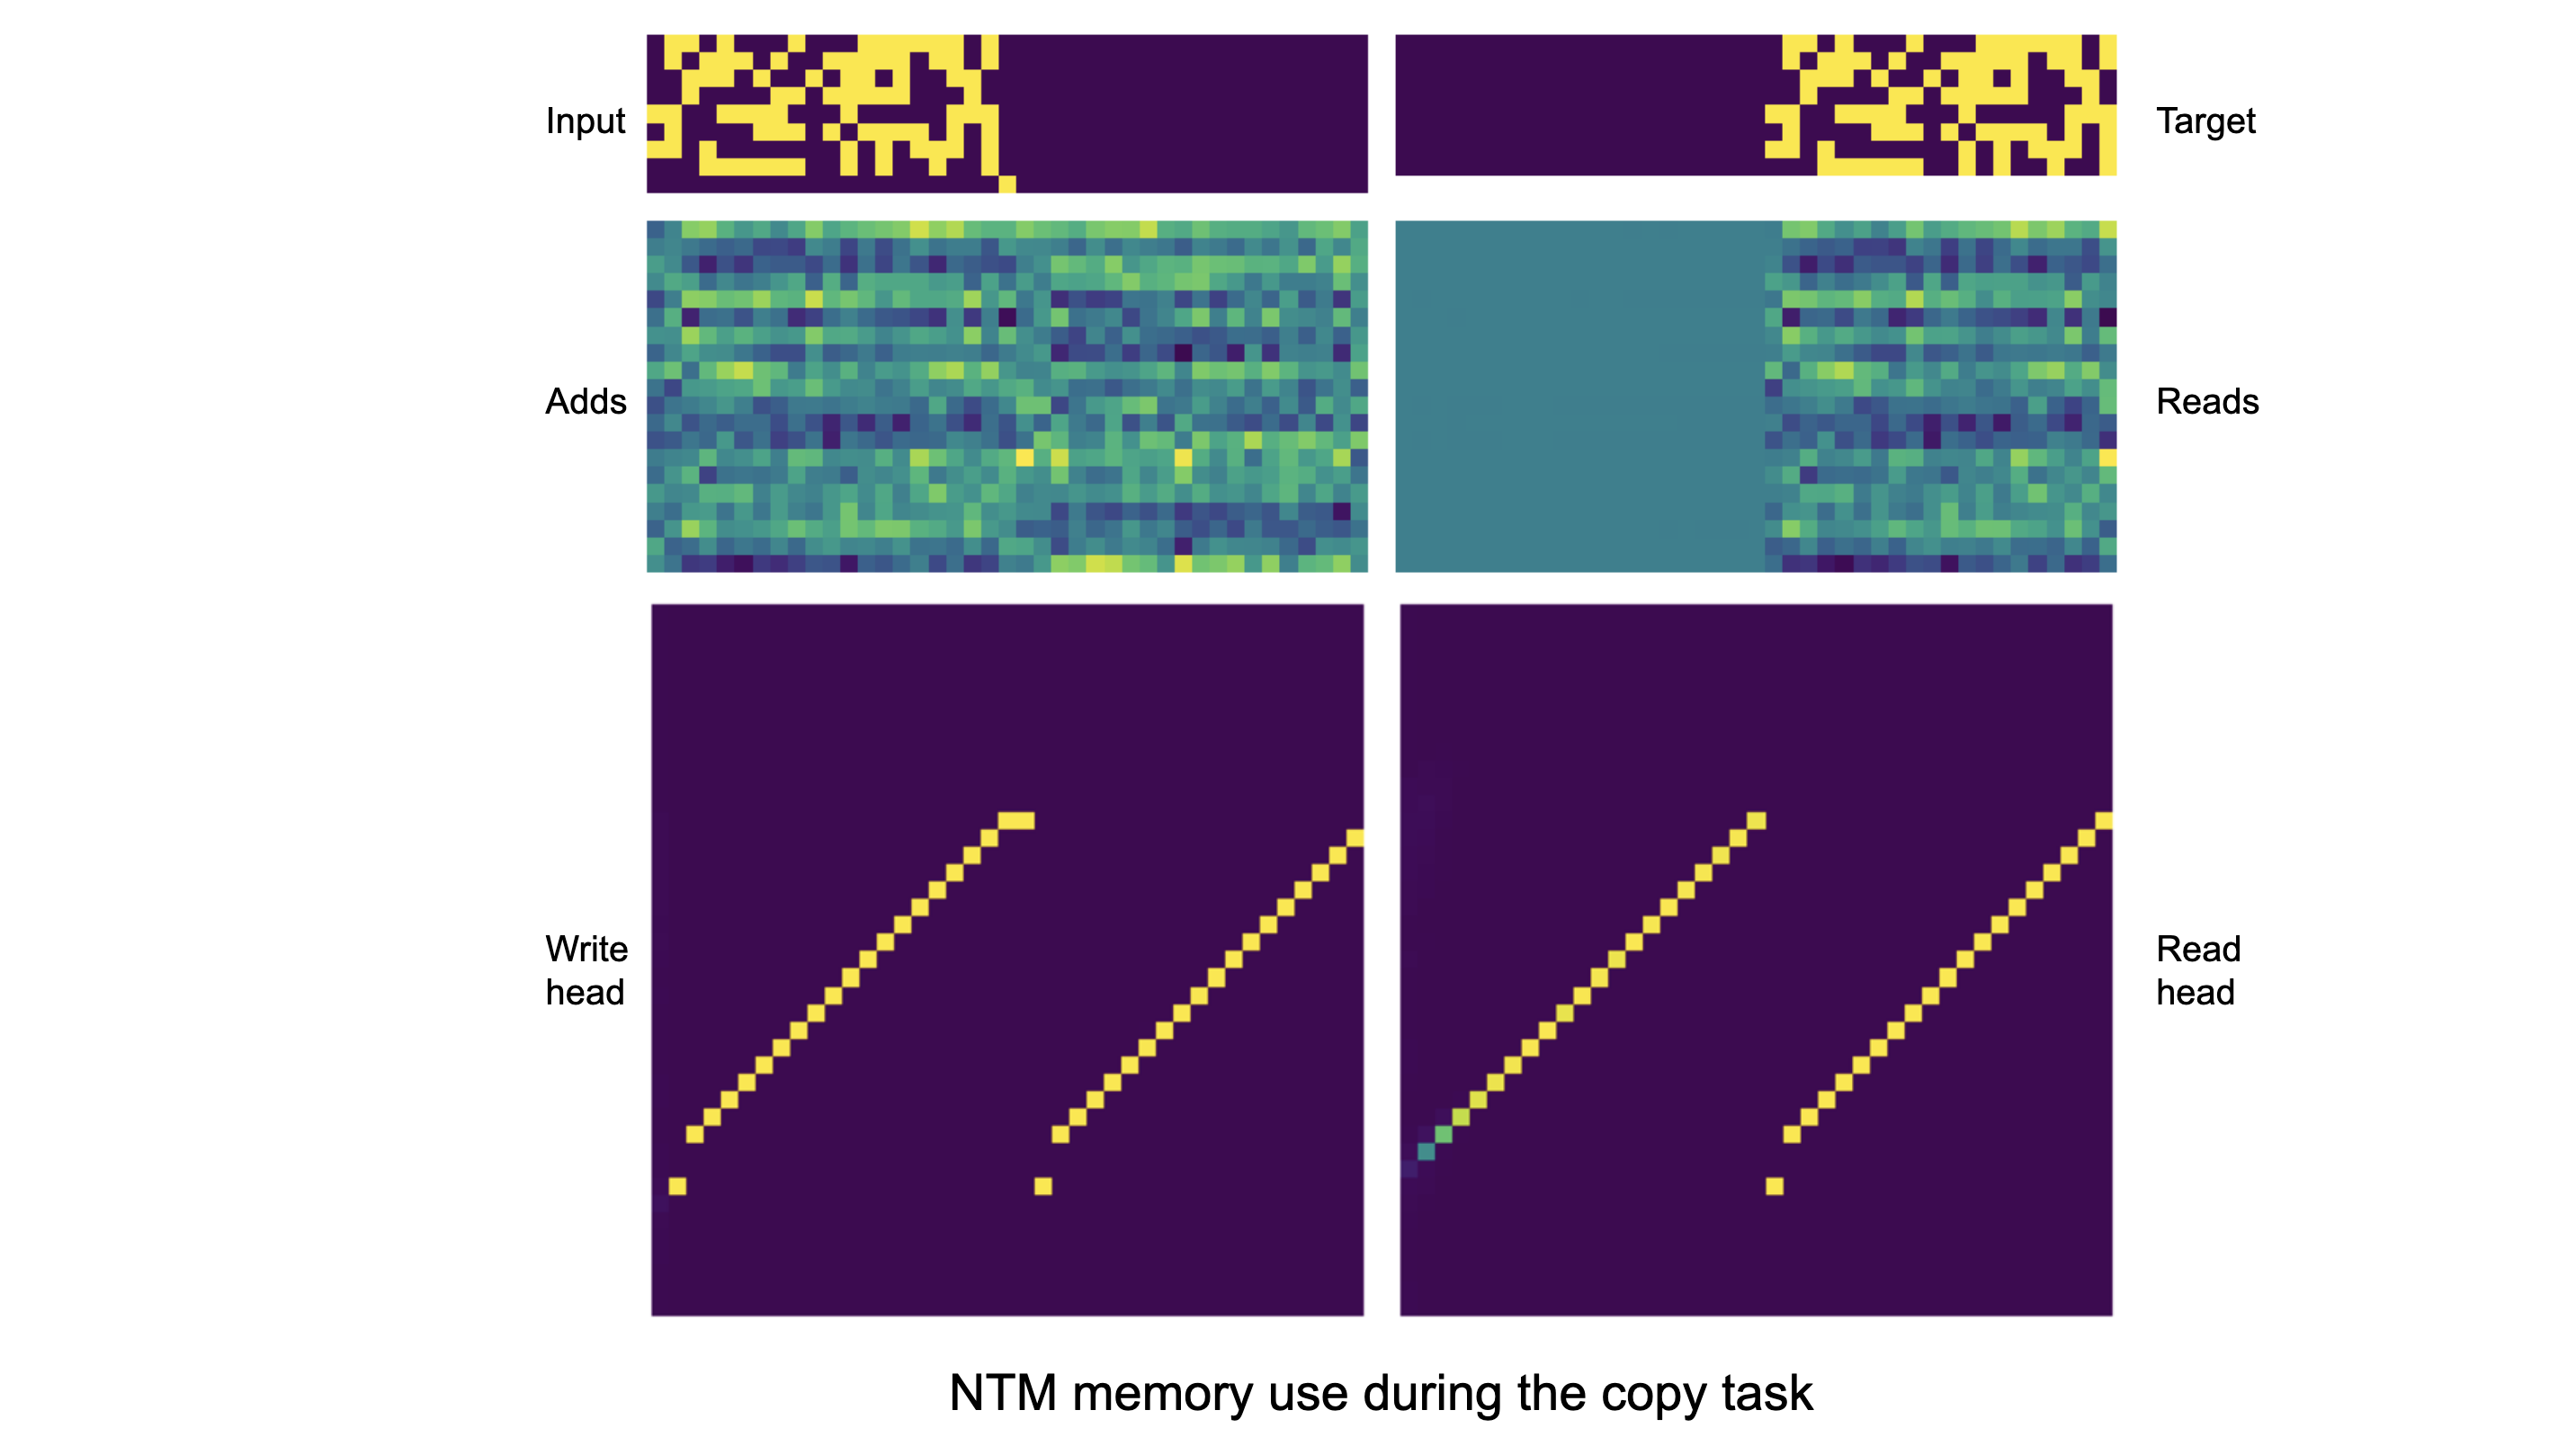 NTM memory during copy task